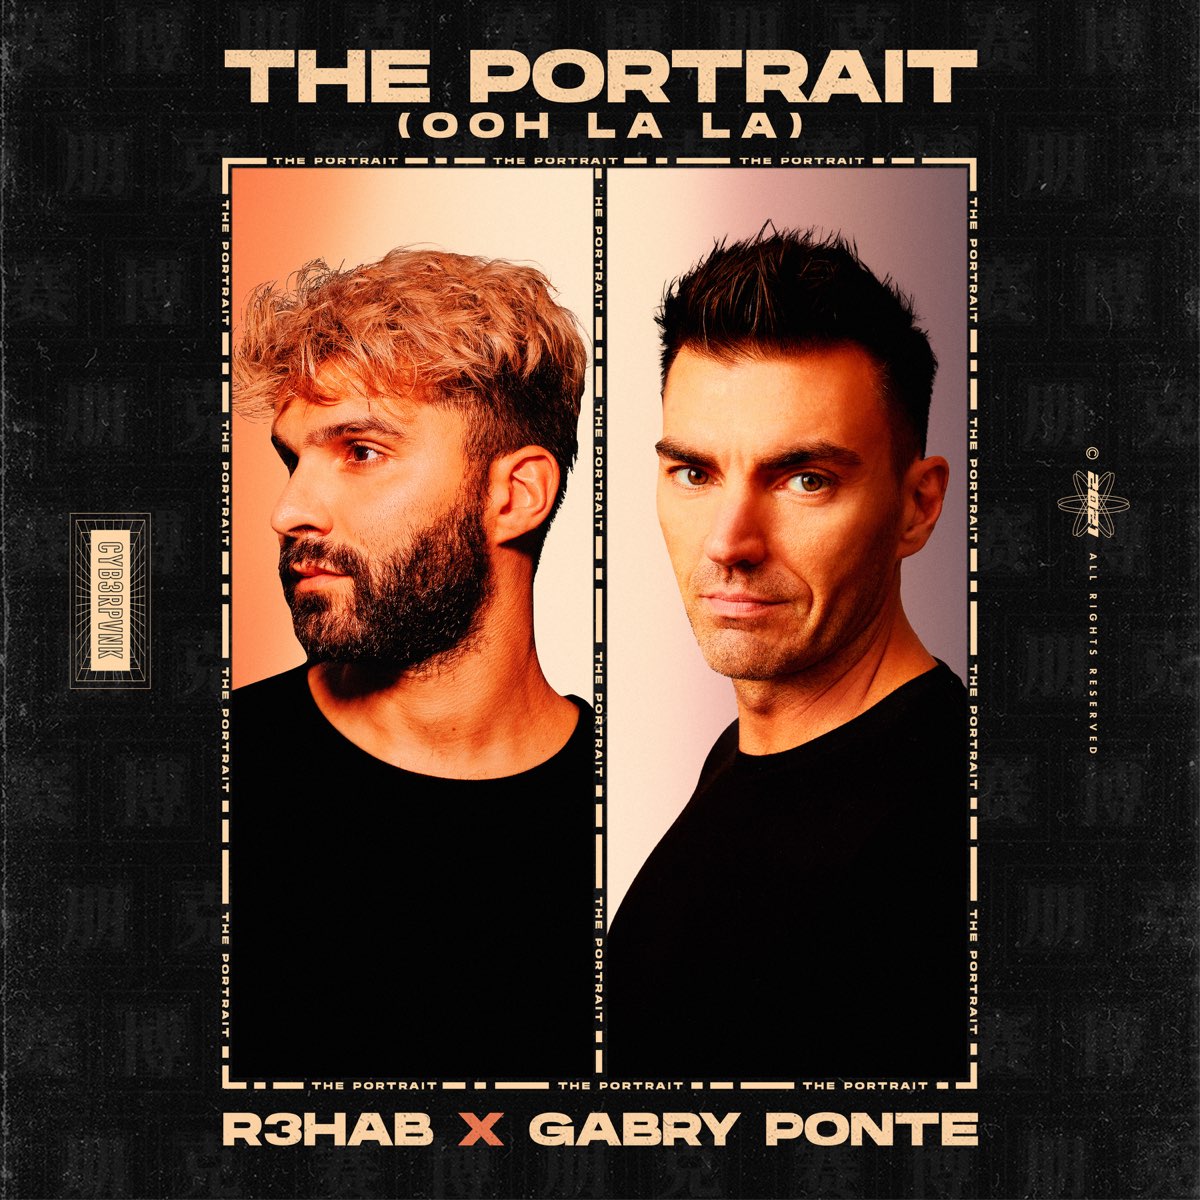 R3HAB & Gabry Ponte — The Portrait (Ooh La La) cover artwork